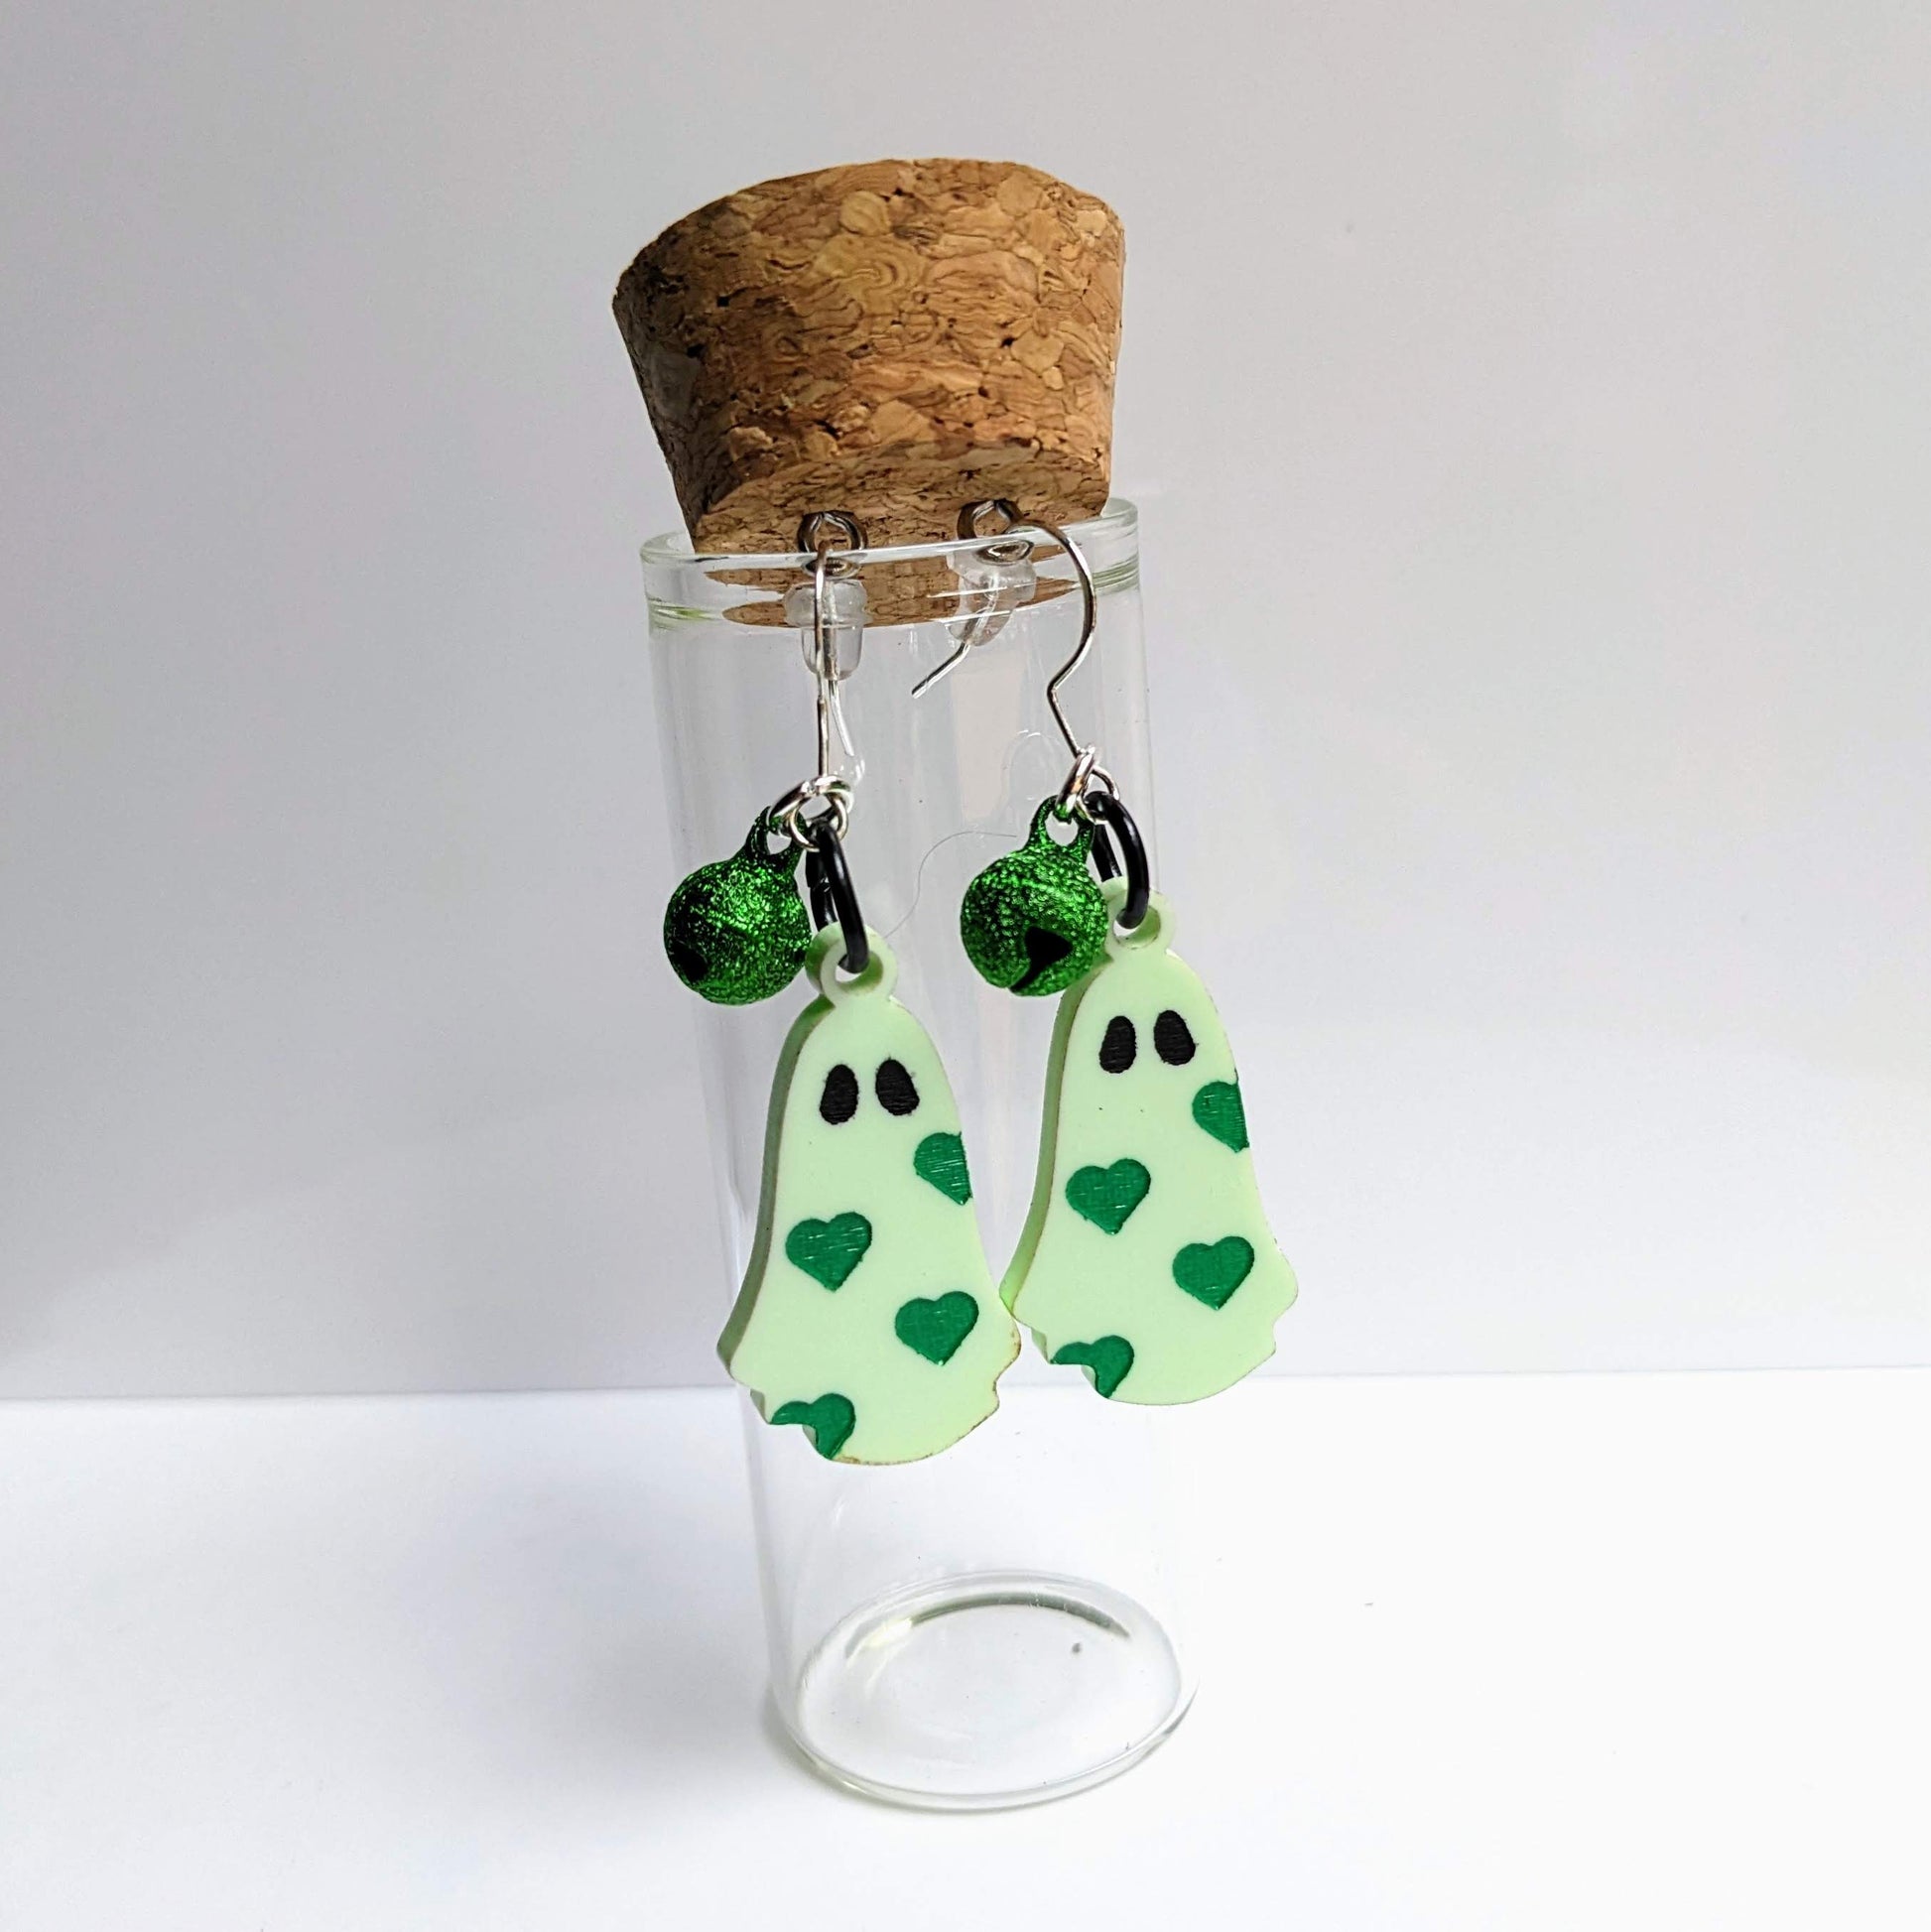 alt="Pastel green acrylic heart ghost earrings and bells"